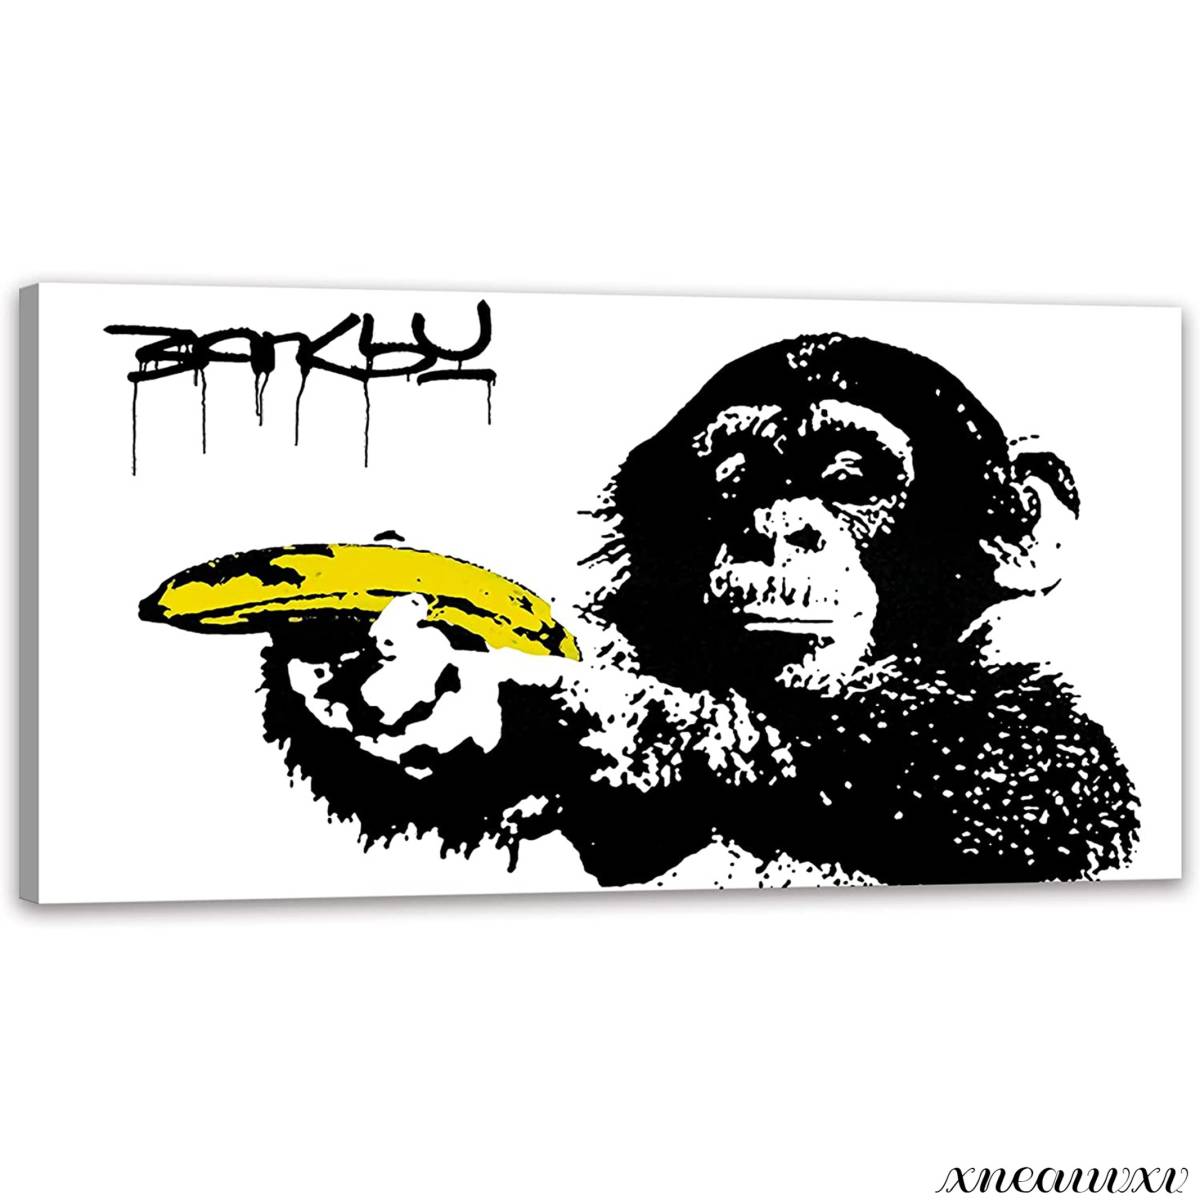 Banksy 대형 아트 패널 복제 인테리어 룸 장식 장식 캔버스 회화 벽 교수형 단색 단순 추상 현대 침팬지, 삽화, 그림, 그래픽